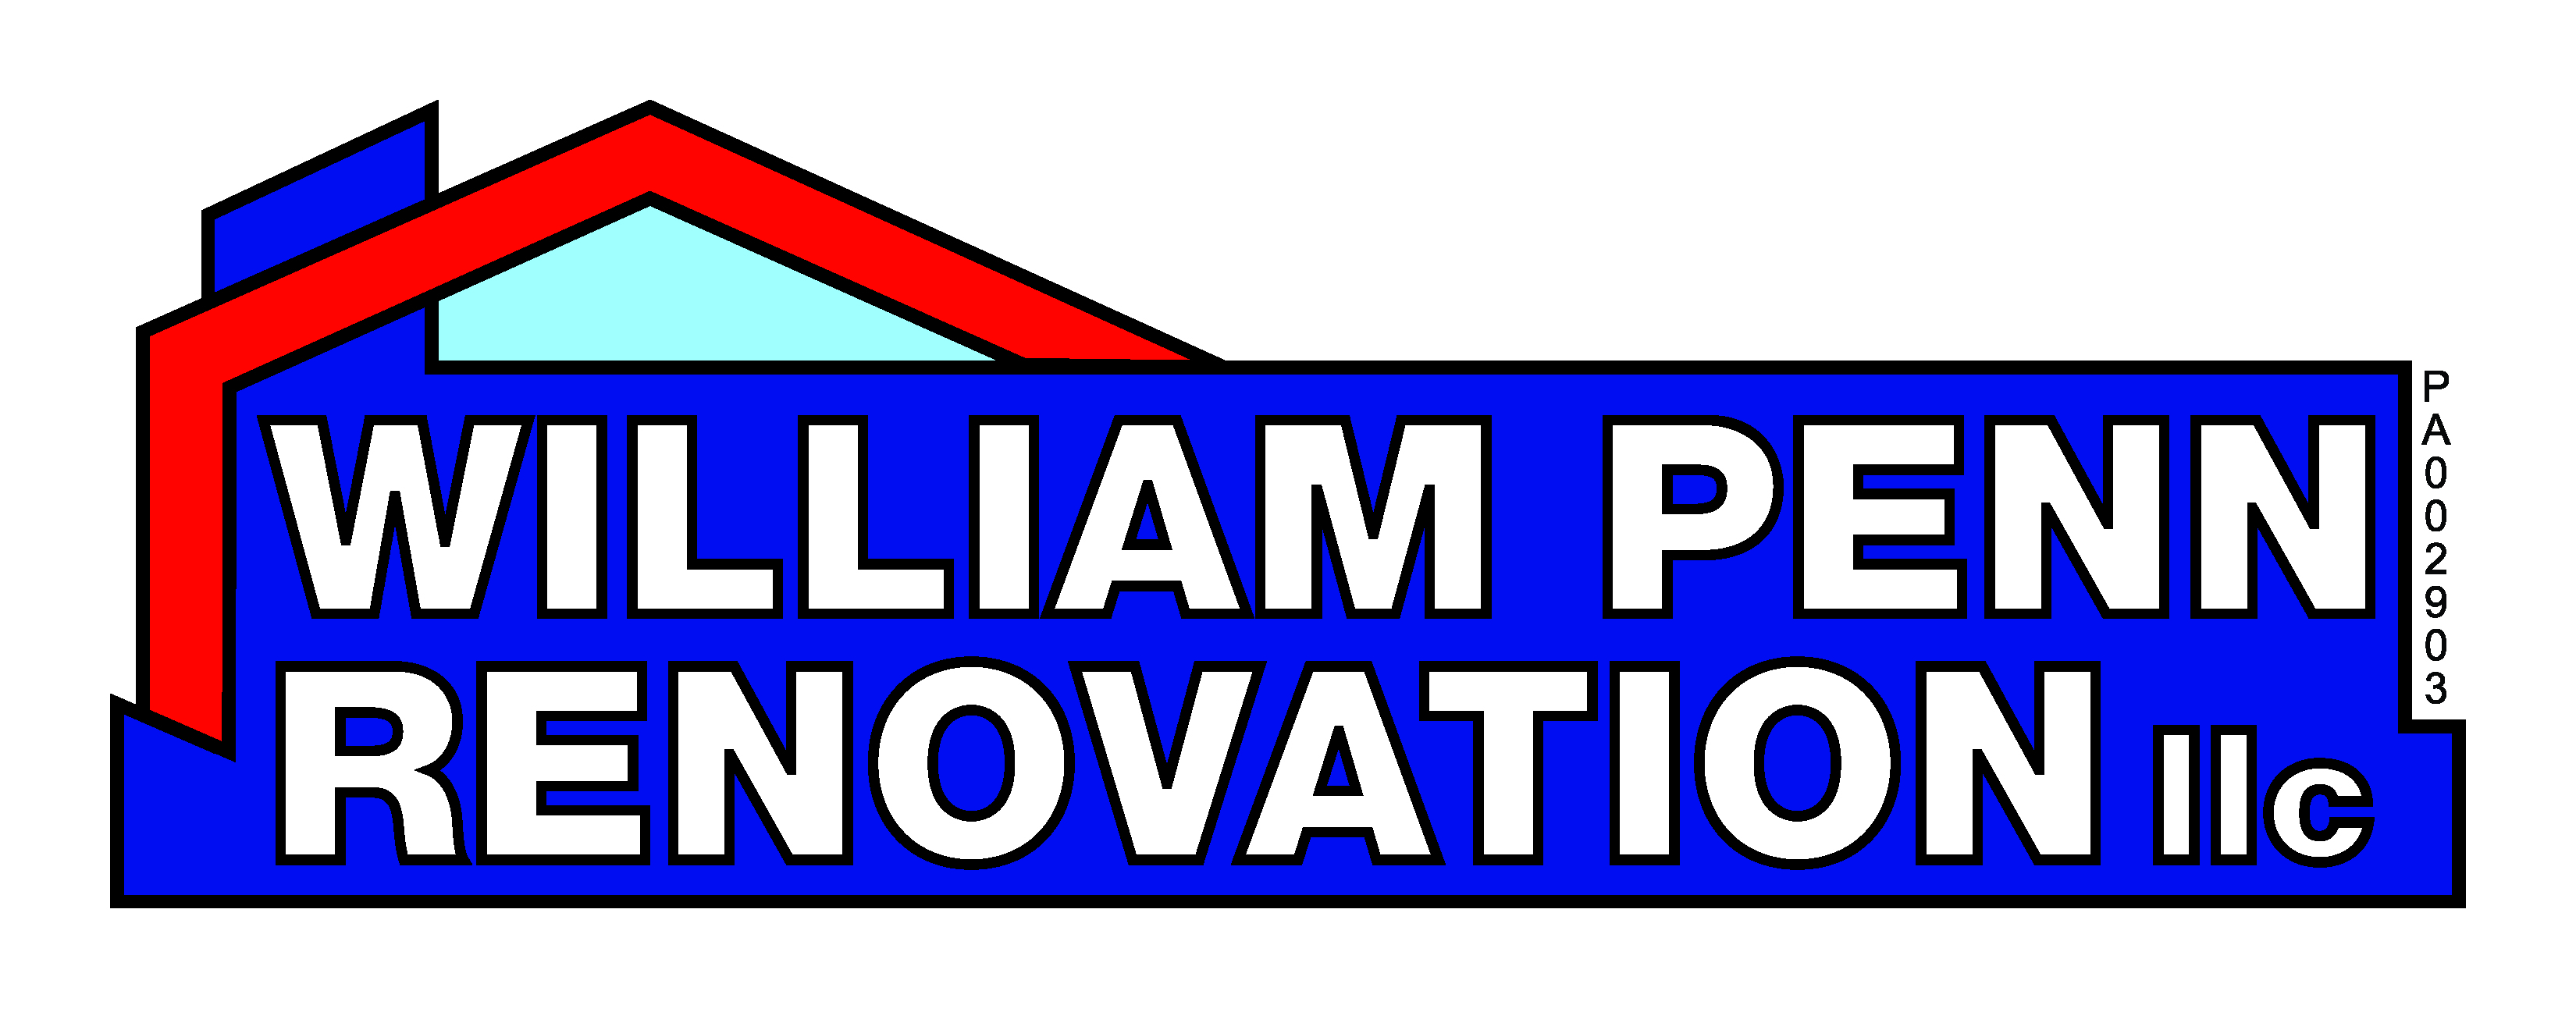 William Penn Renovation Company Logo